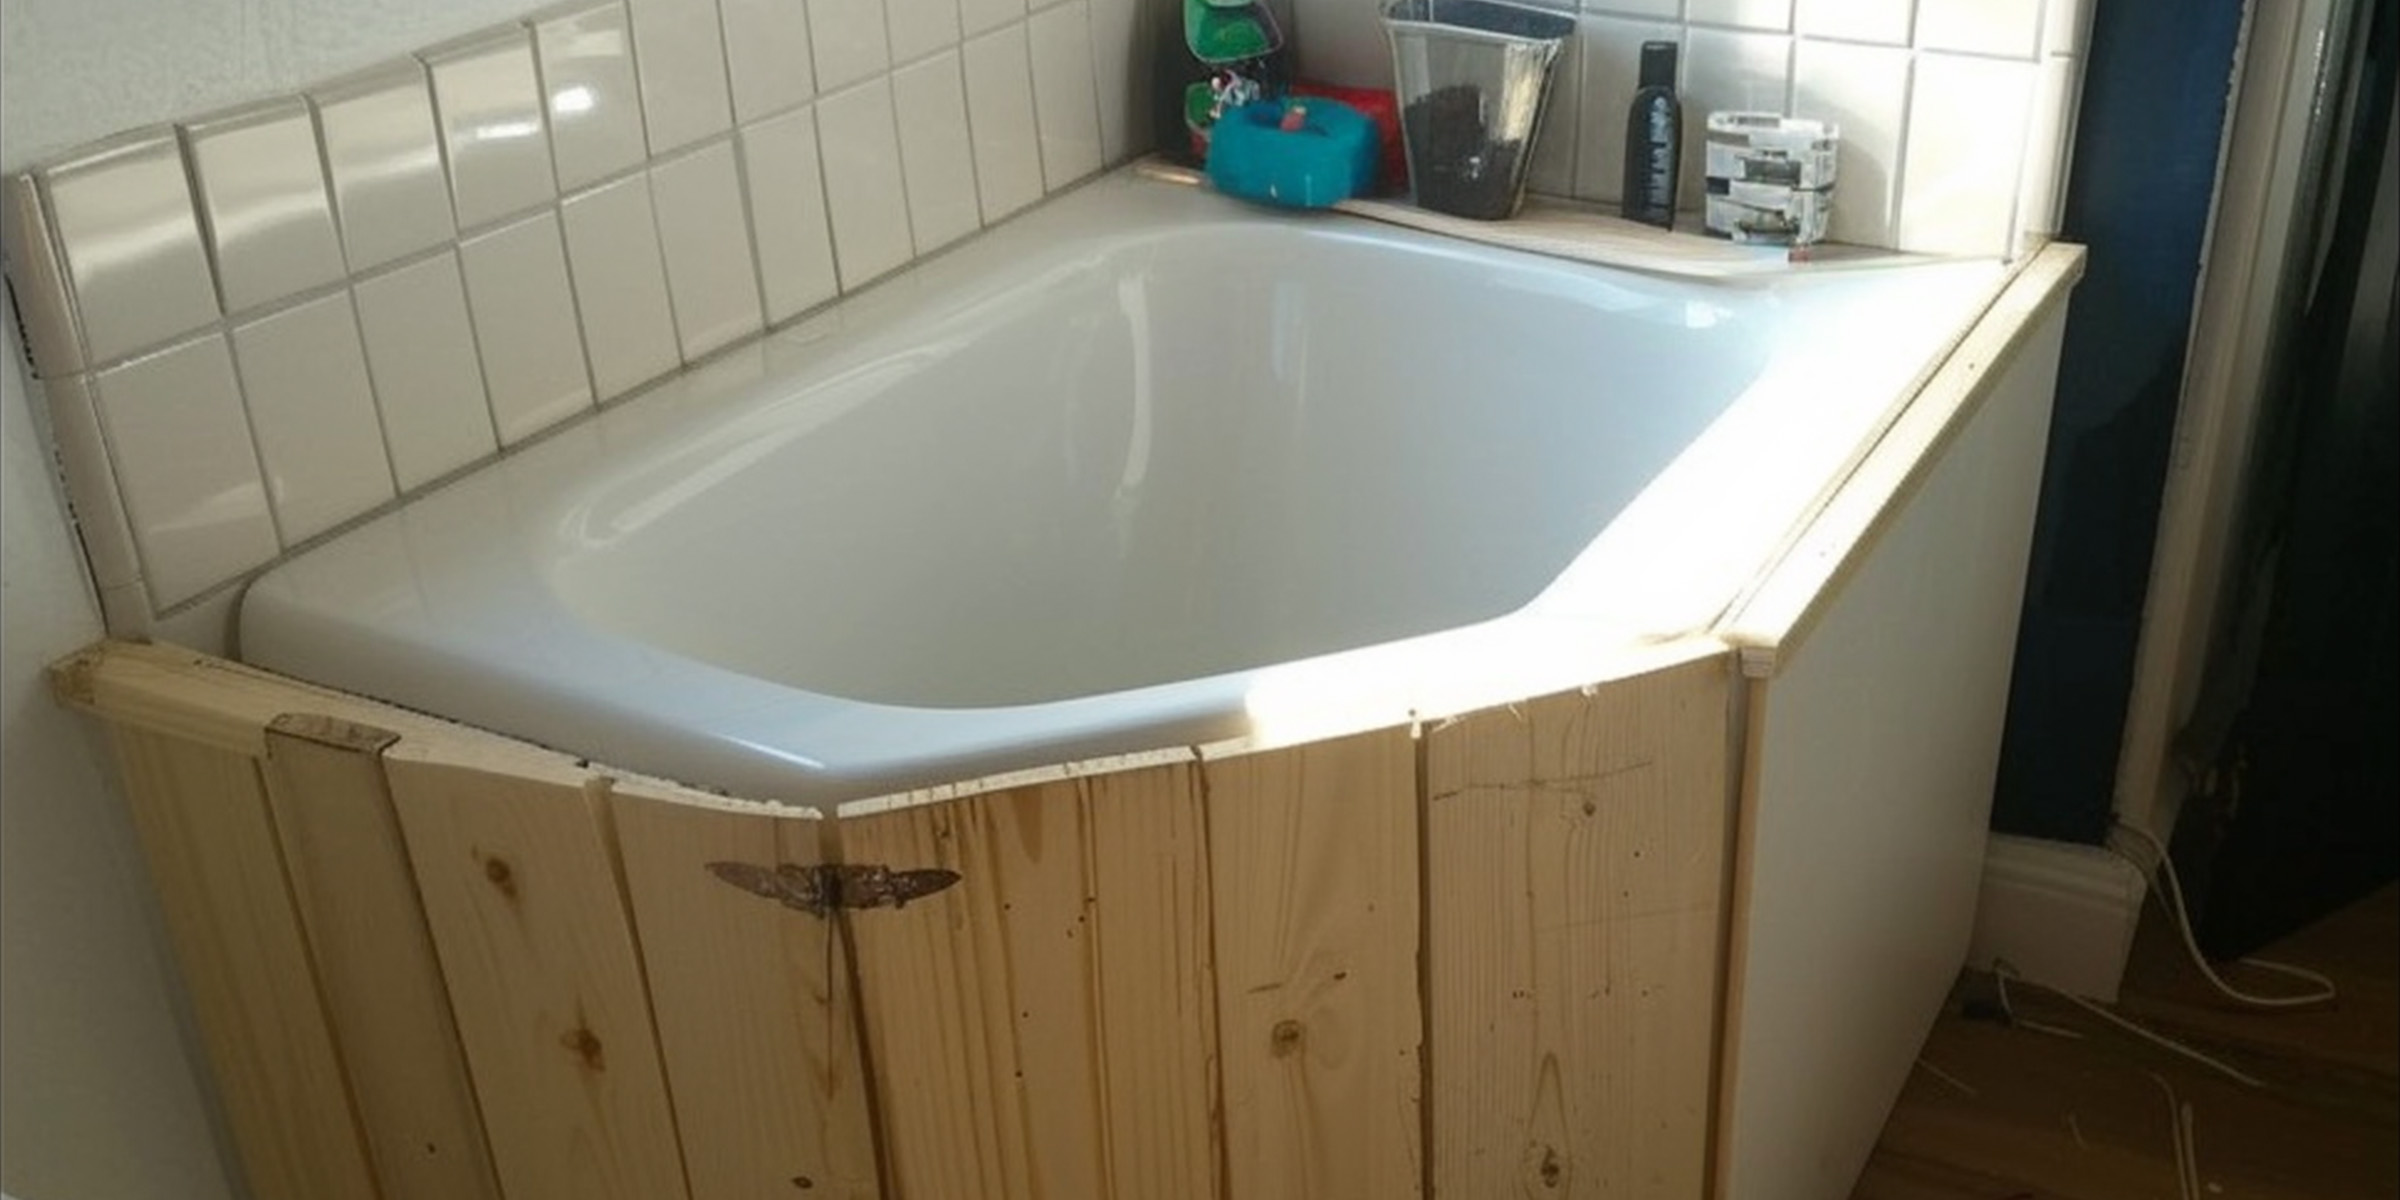 A corner bathtub with decorative wooden paneling | Source: AmoMama